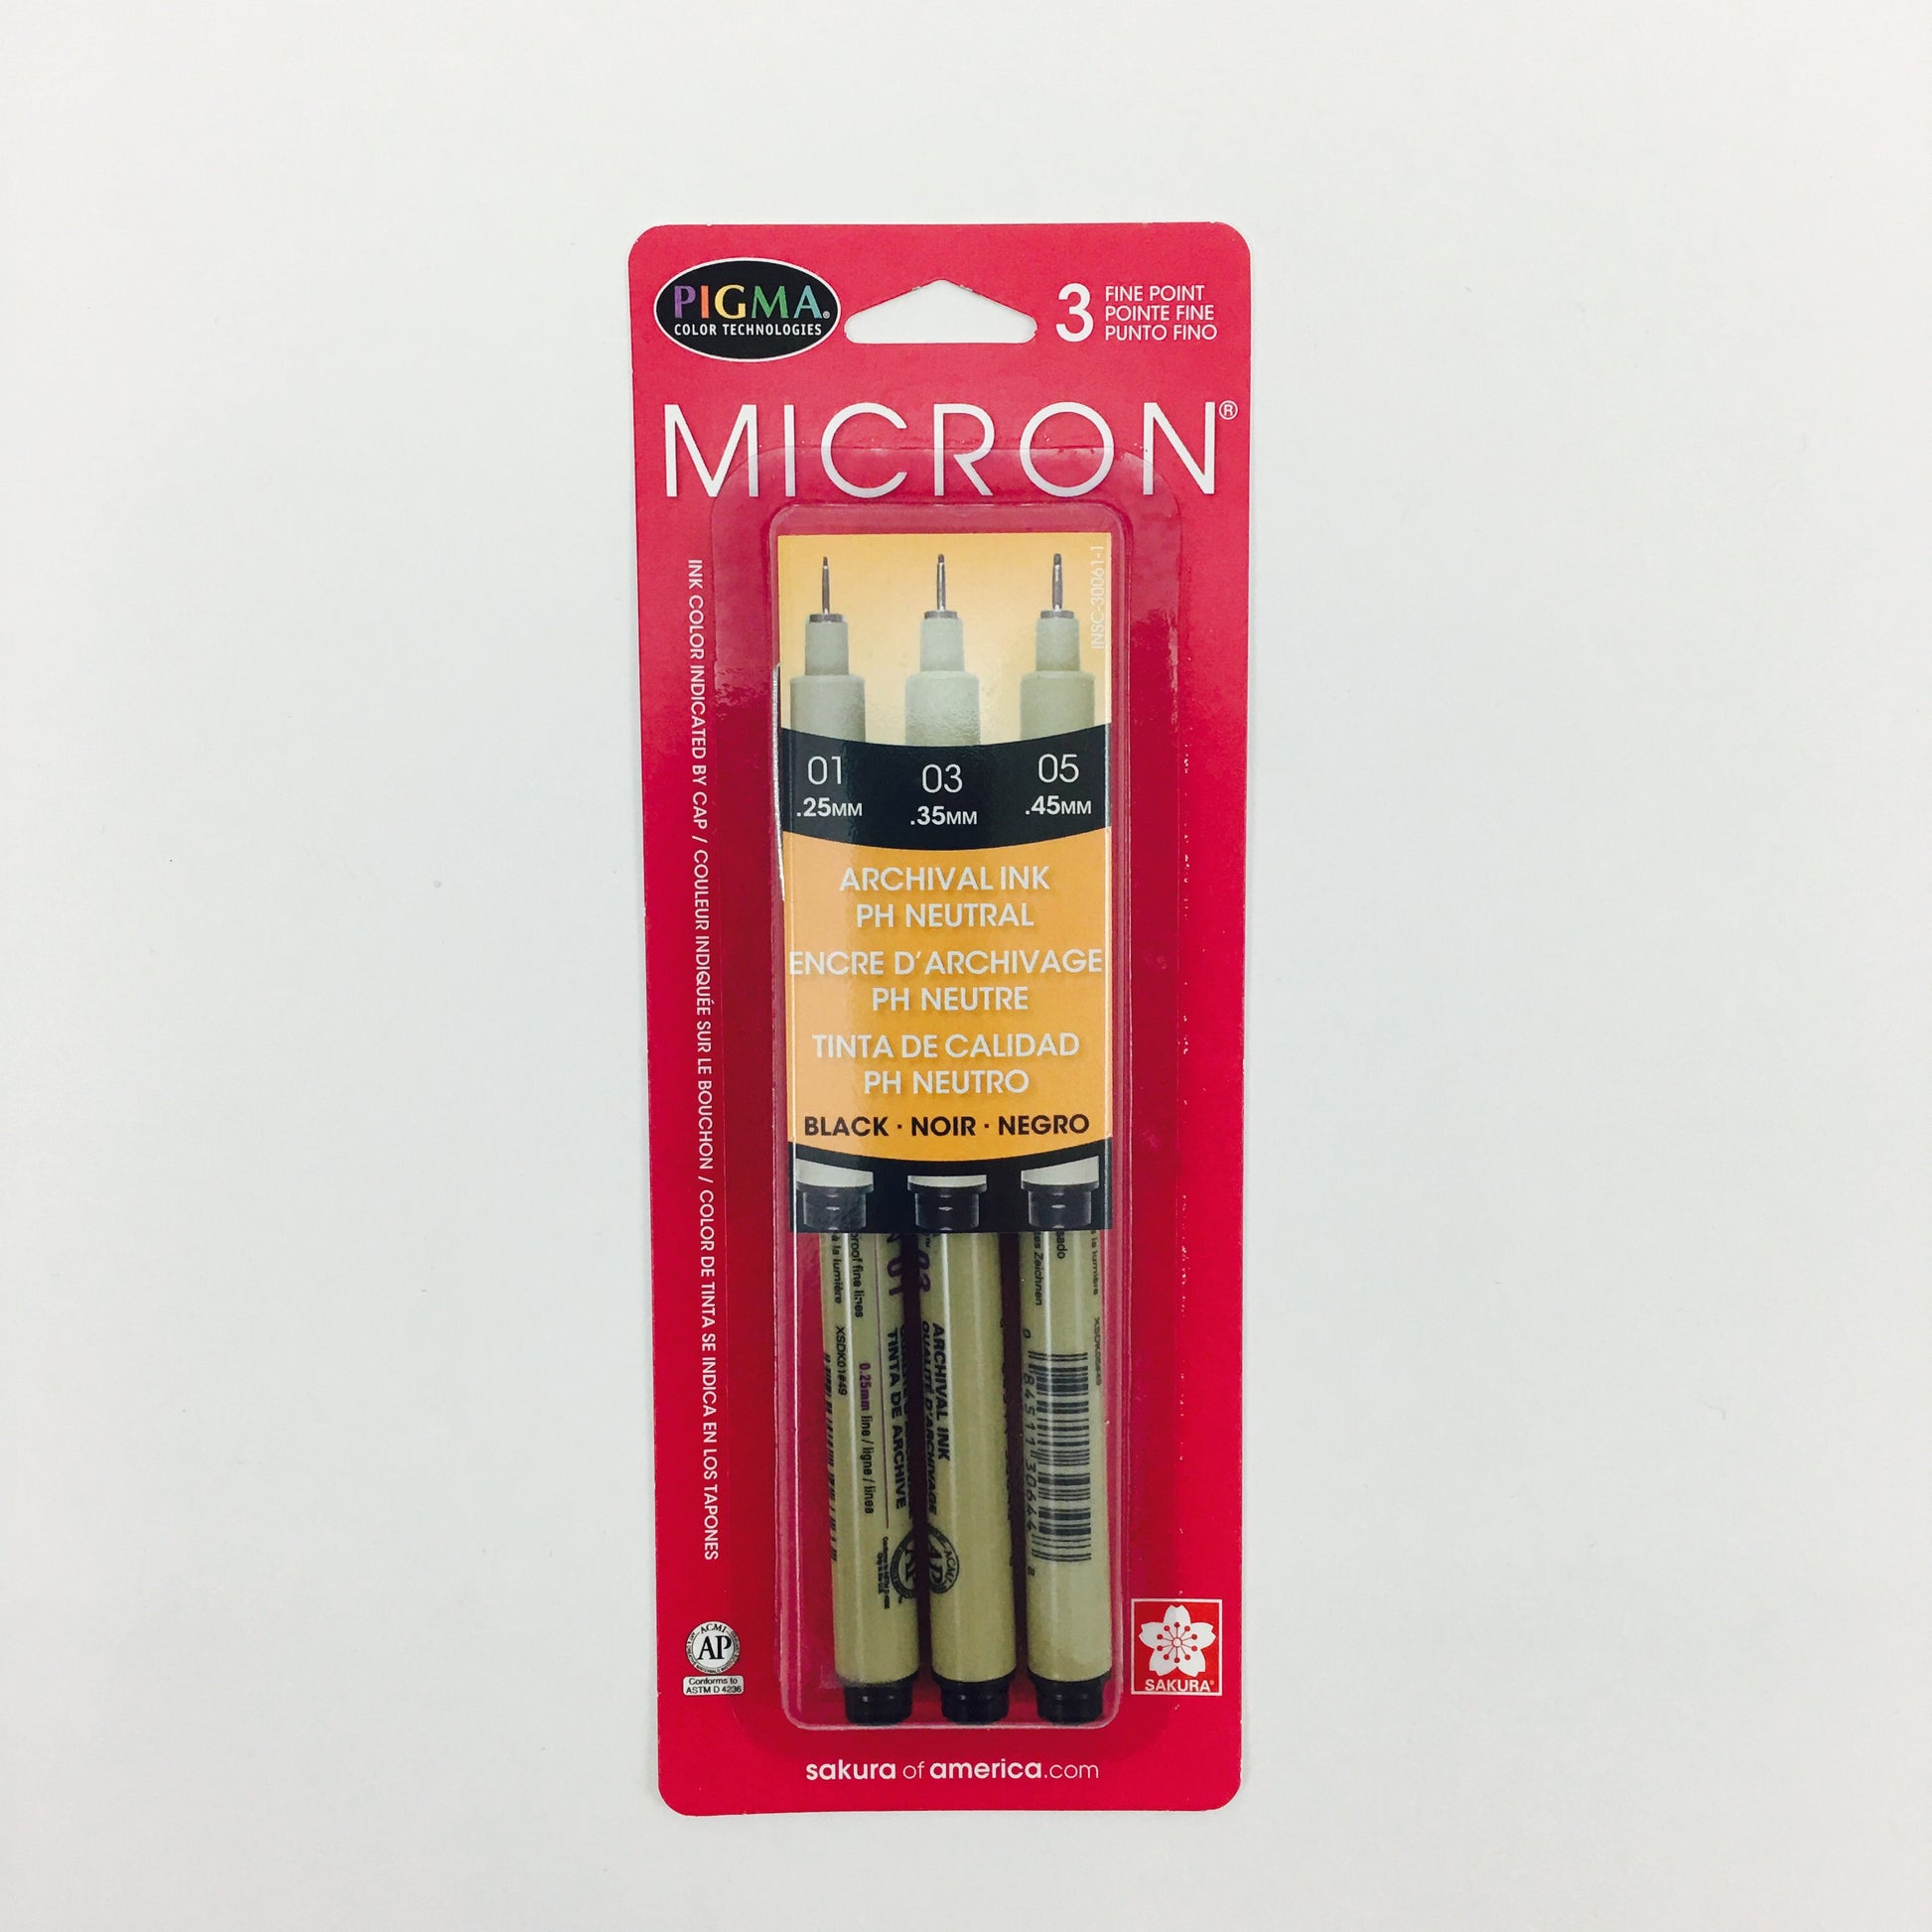 Pigma Micron Pen Sets - Black - 3 pack (01, 03, 05) by Sakura - K. A. Artist Shop